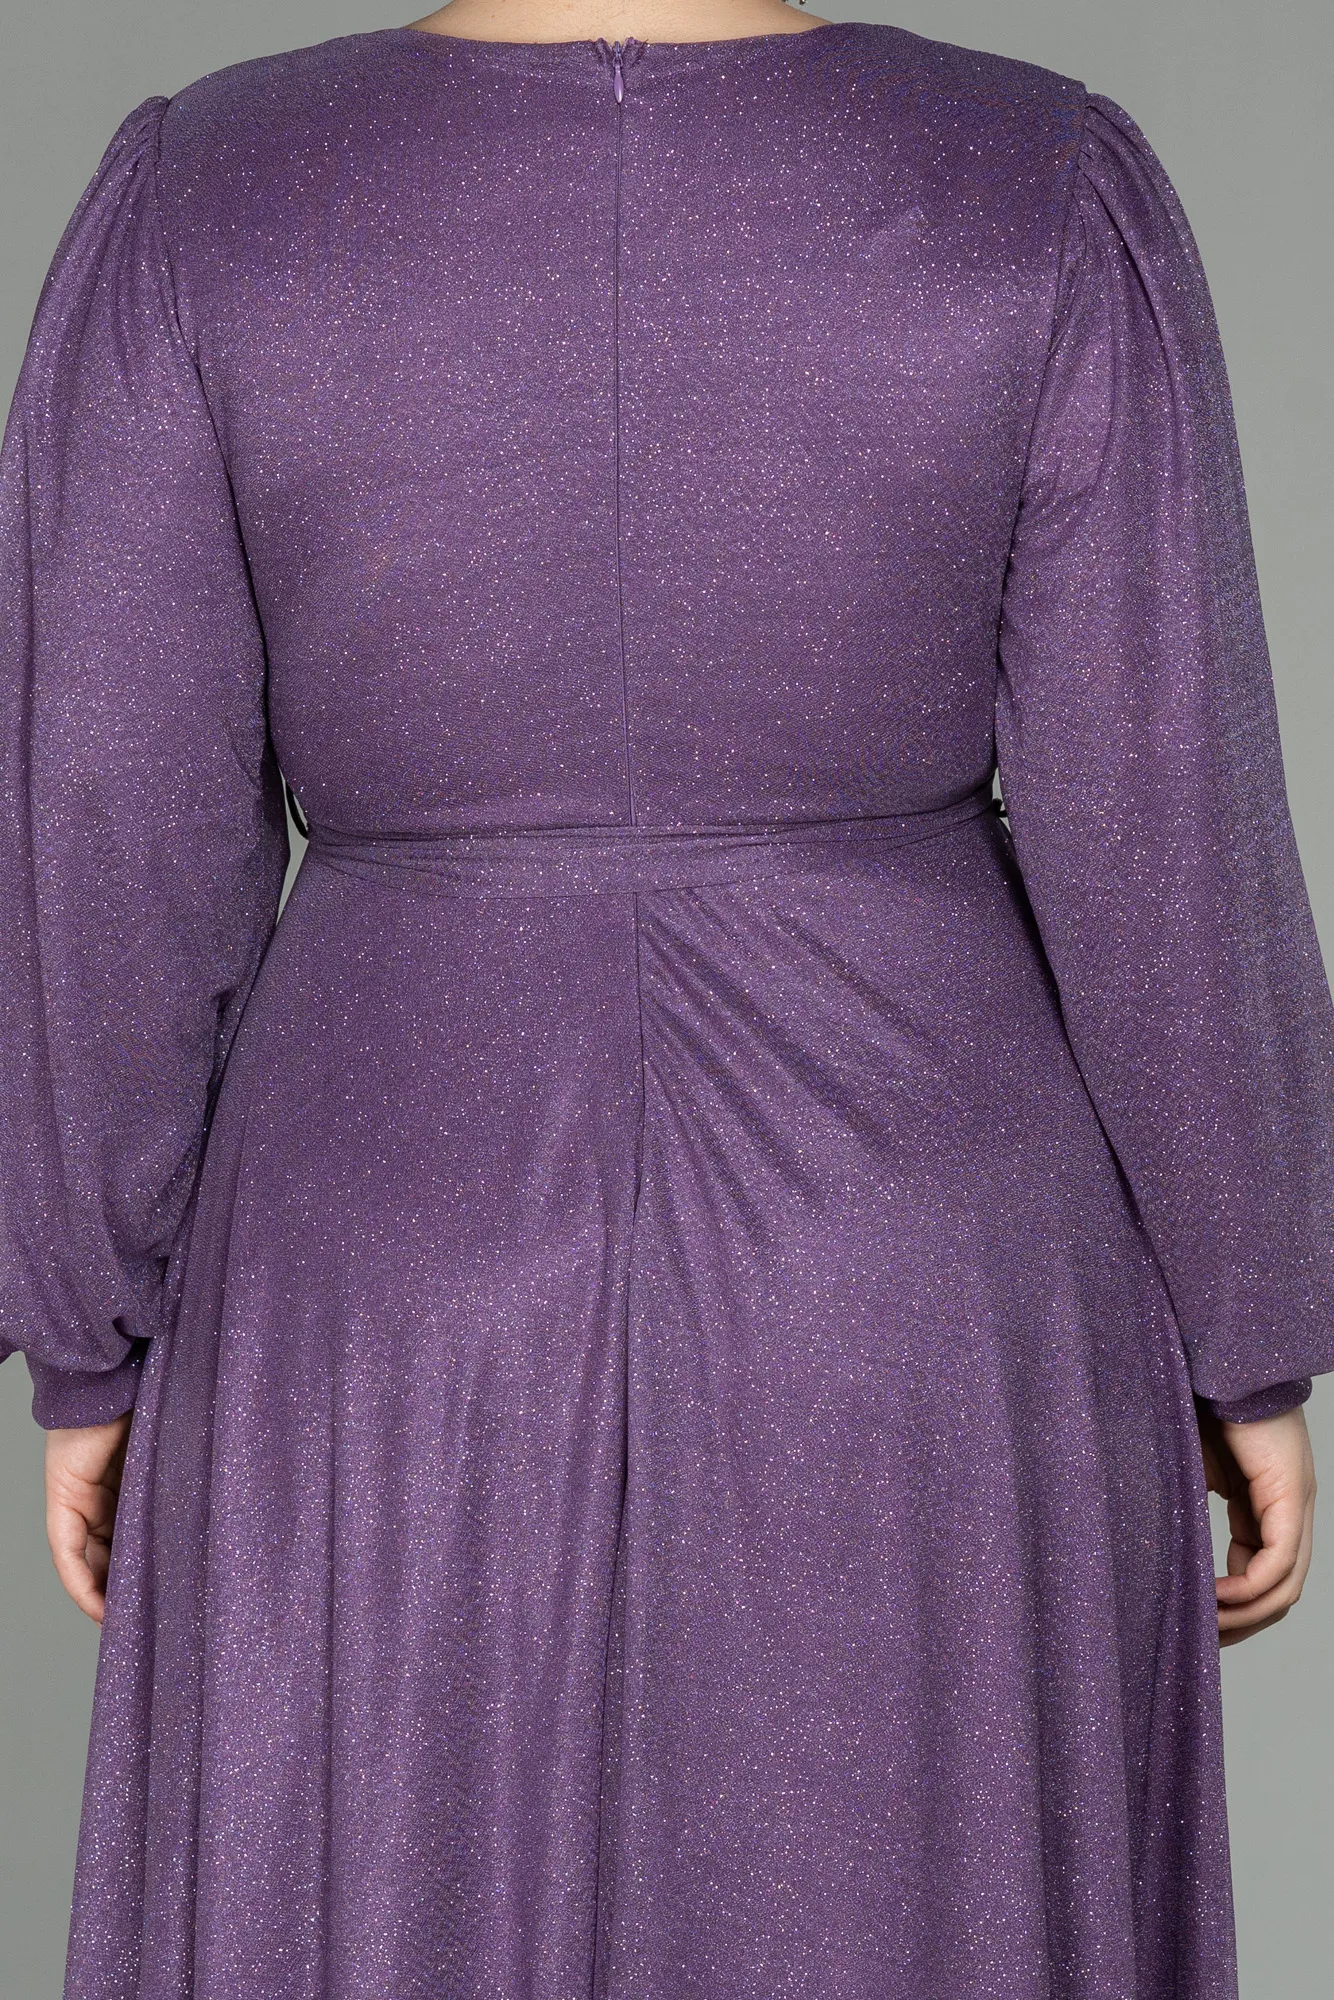 Lavender-Long Plus Size Evening Dress ABU2962